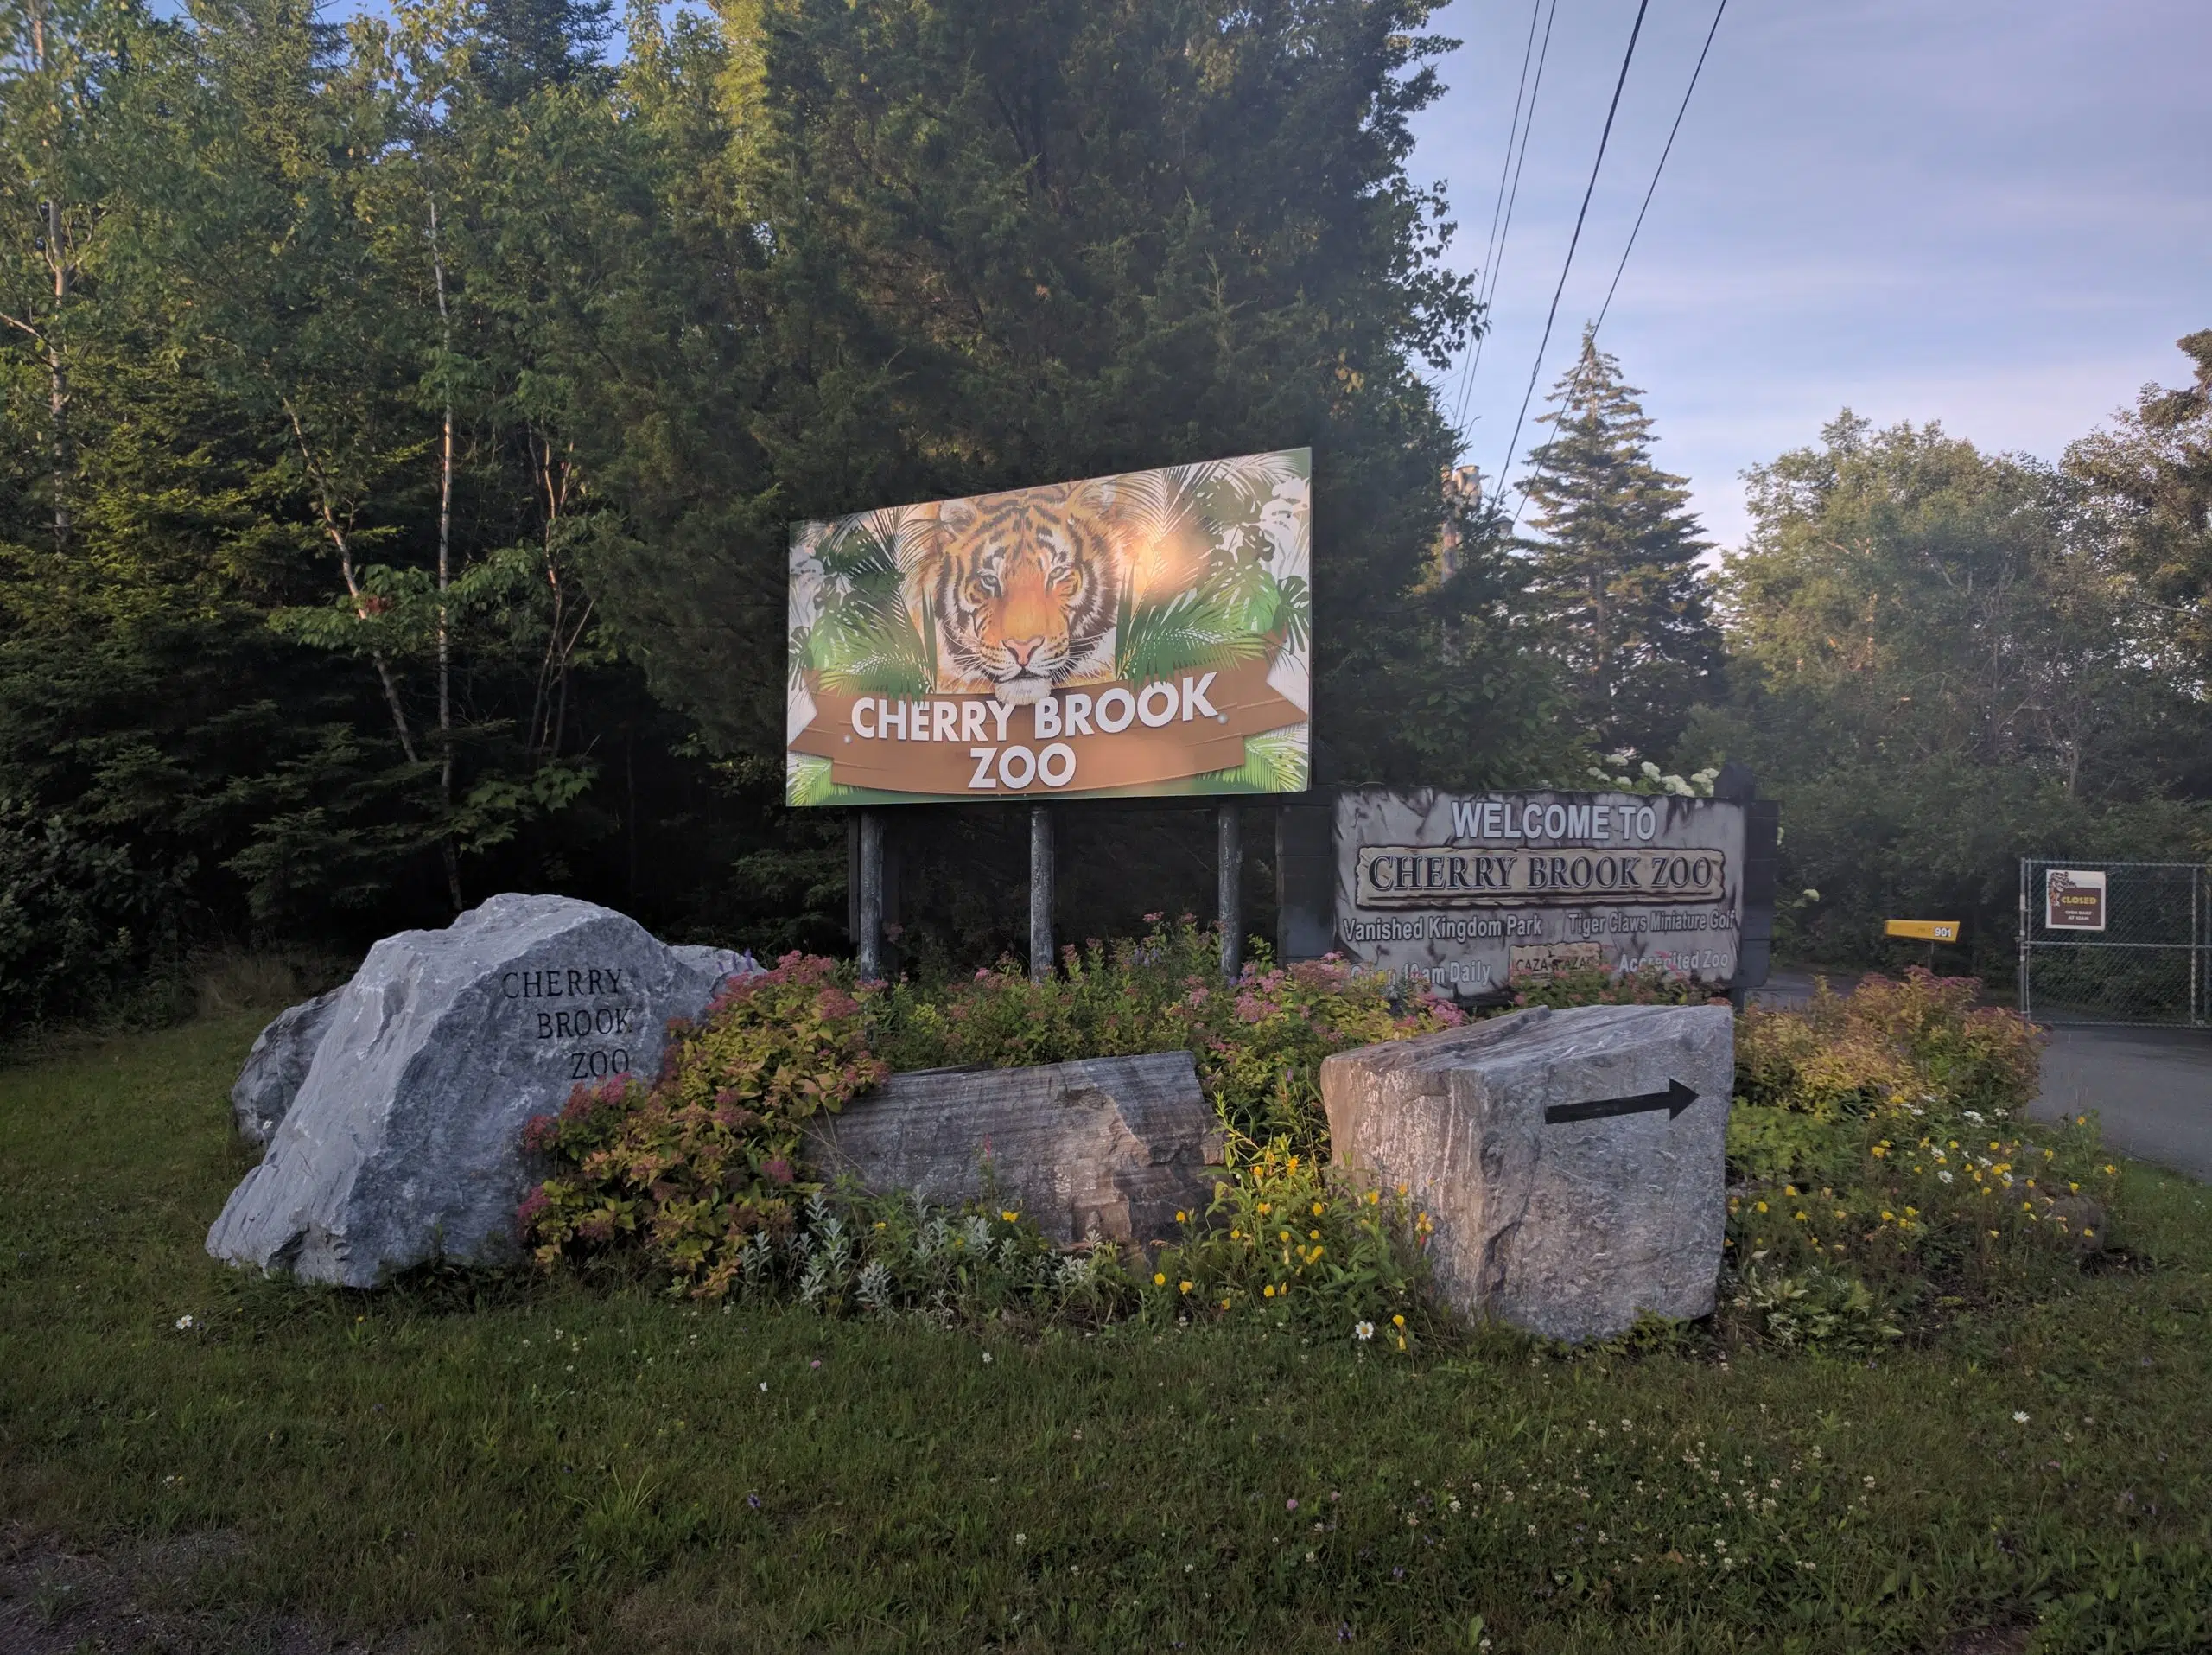 Cherry Brook Zoo To Close